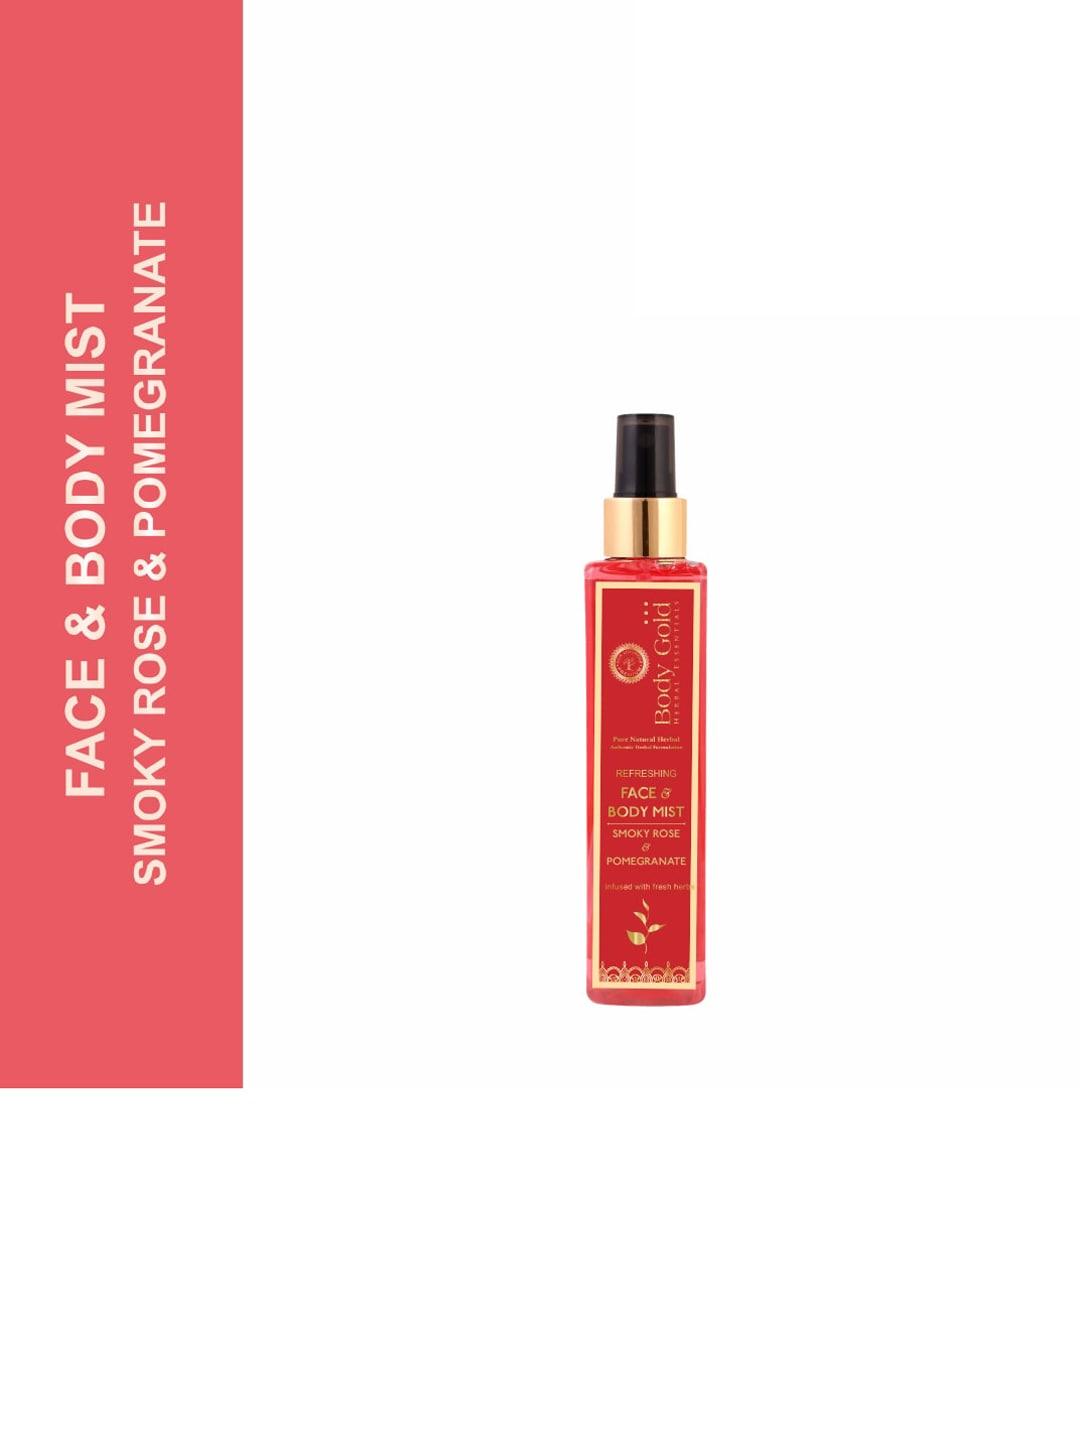 Body Gold Smoky Rose & Pomegranate Refreshing Face & Body Mist Toner 200 ml